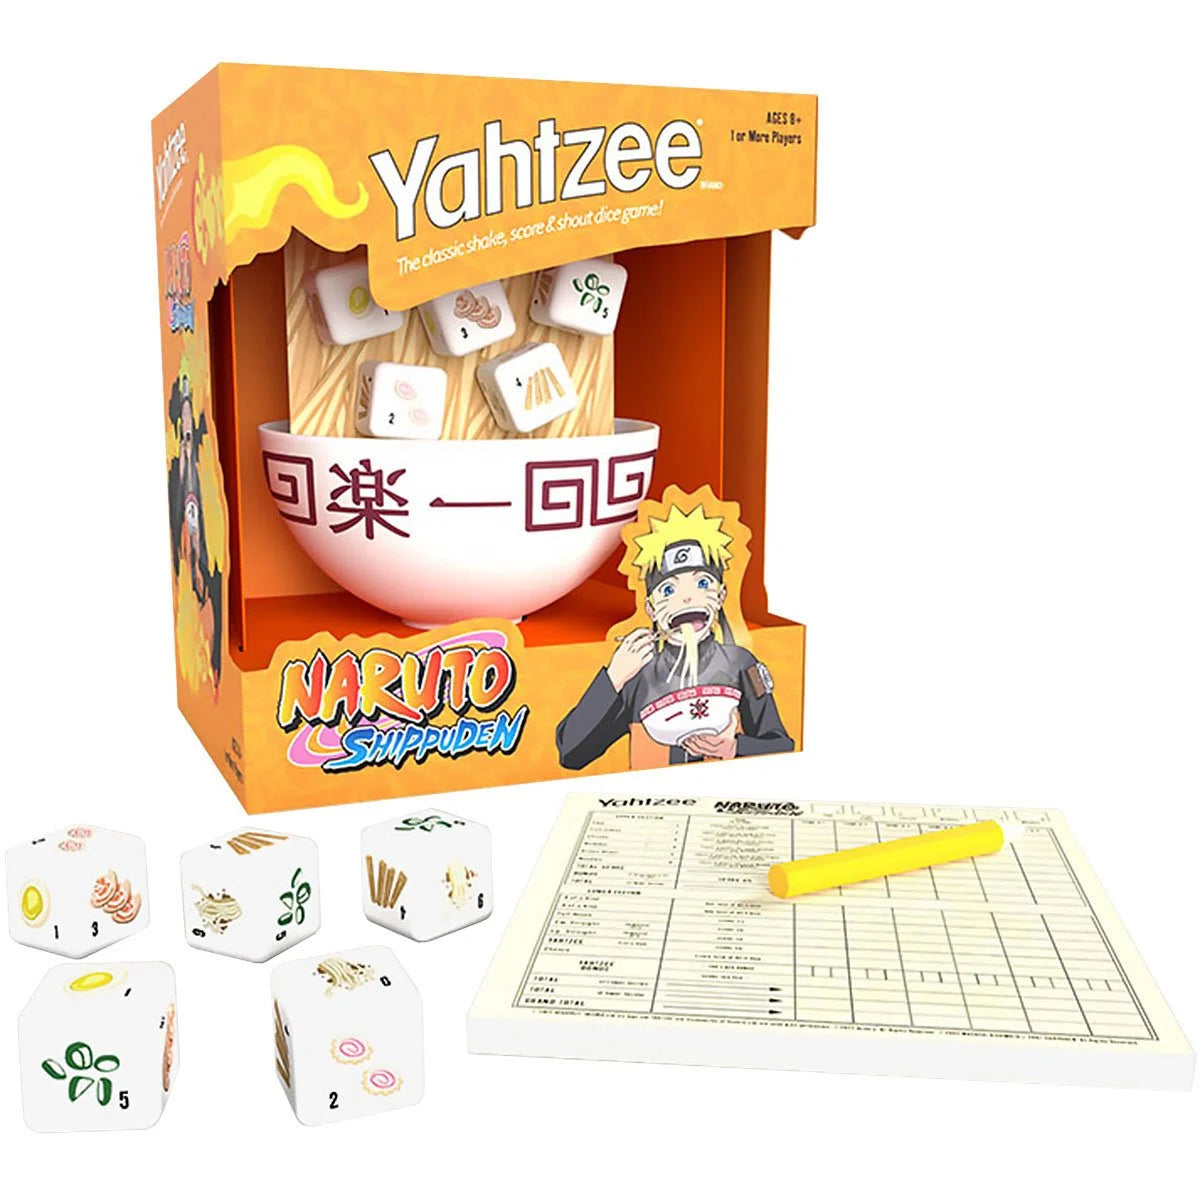 Boardgames - Yahtzee - Naruto | Event Horizon Hobbies CA